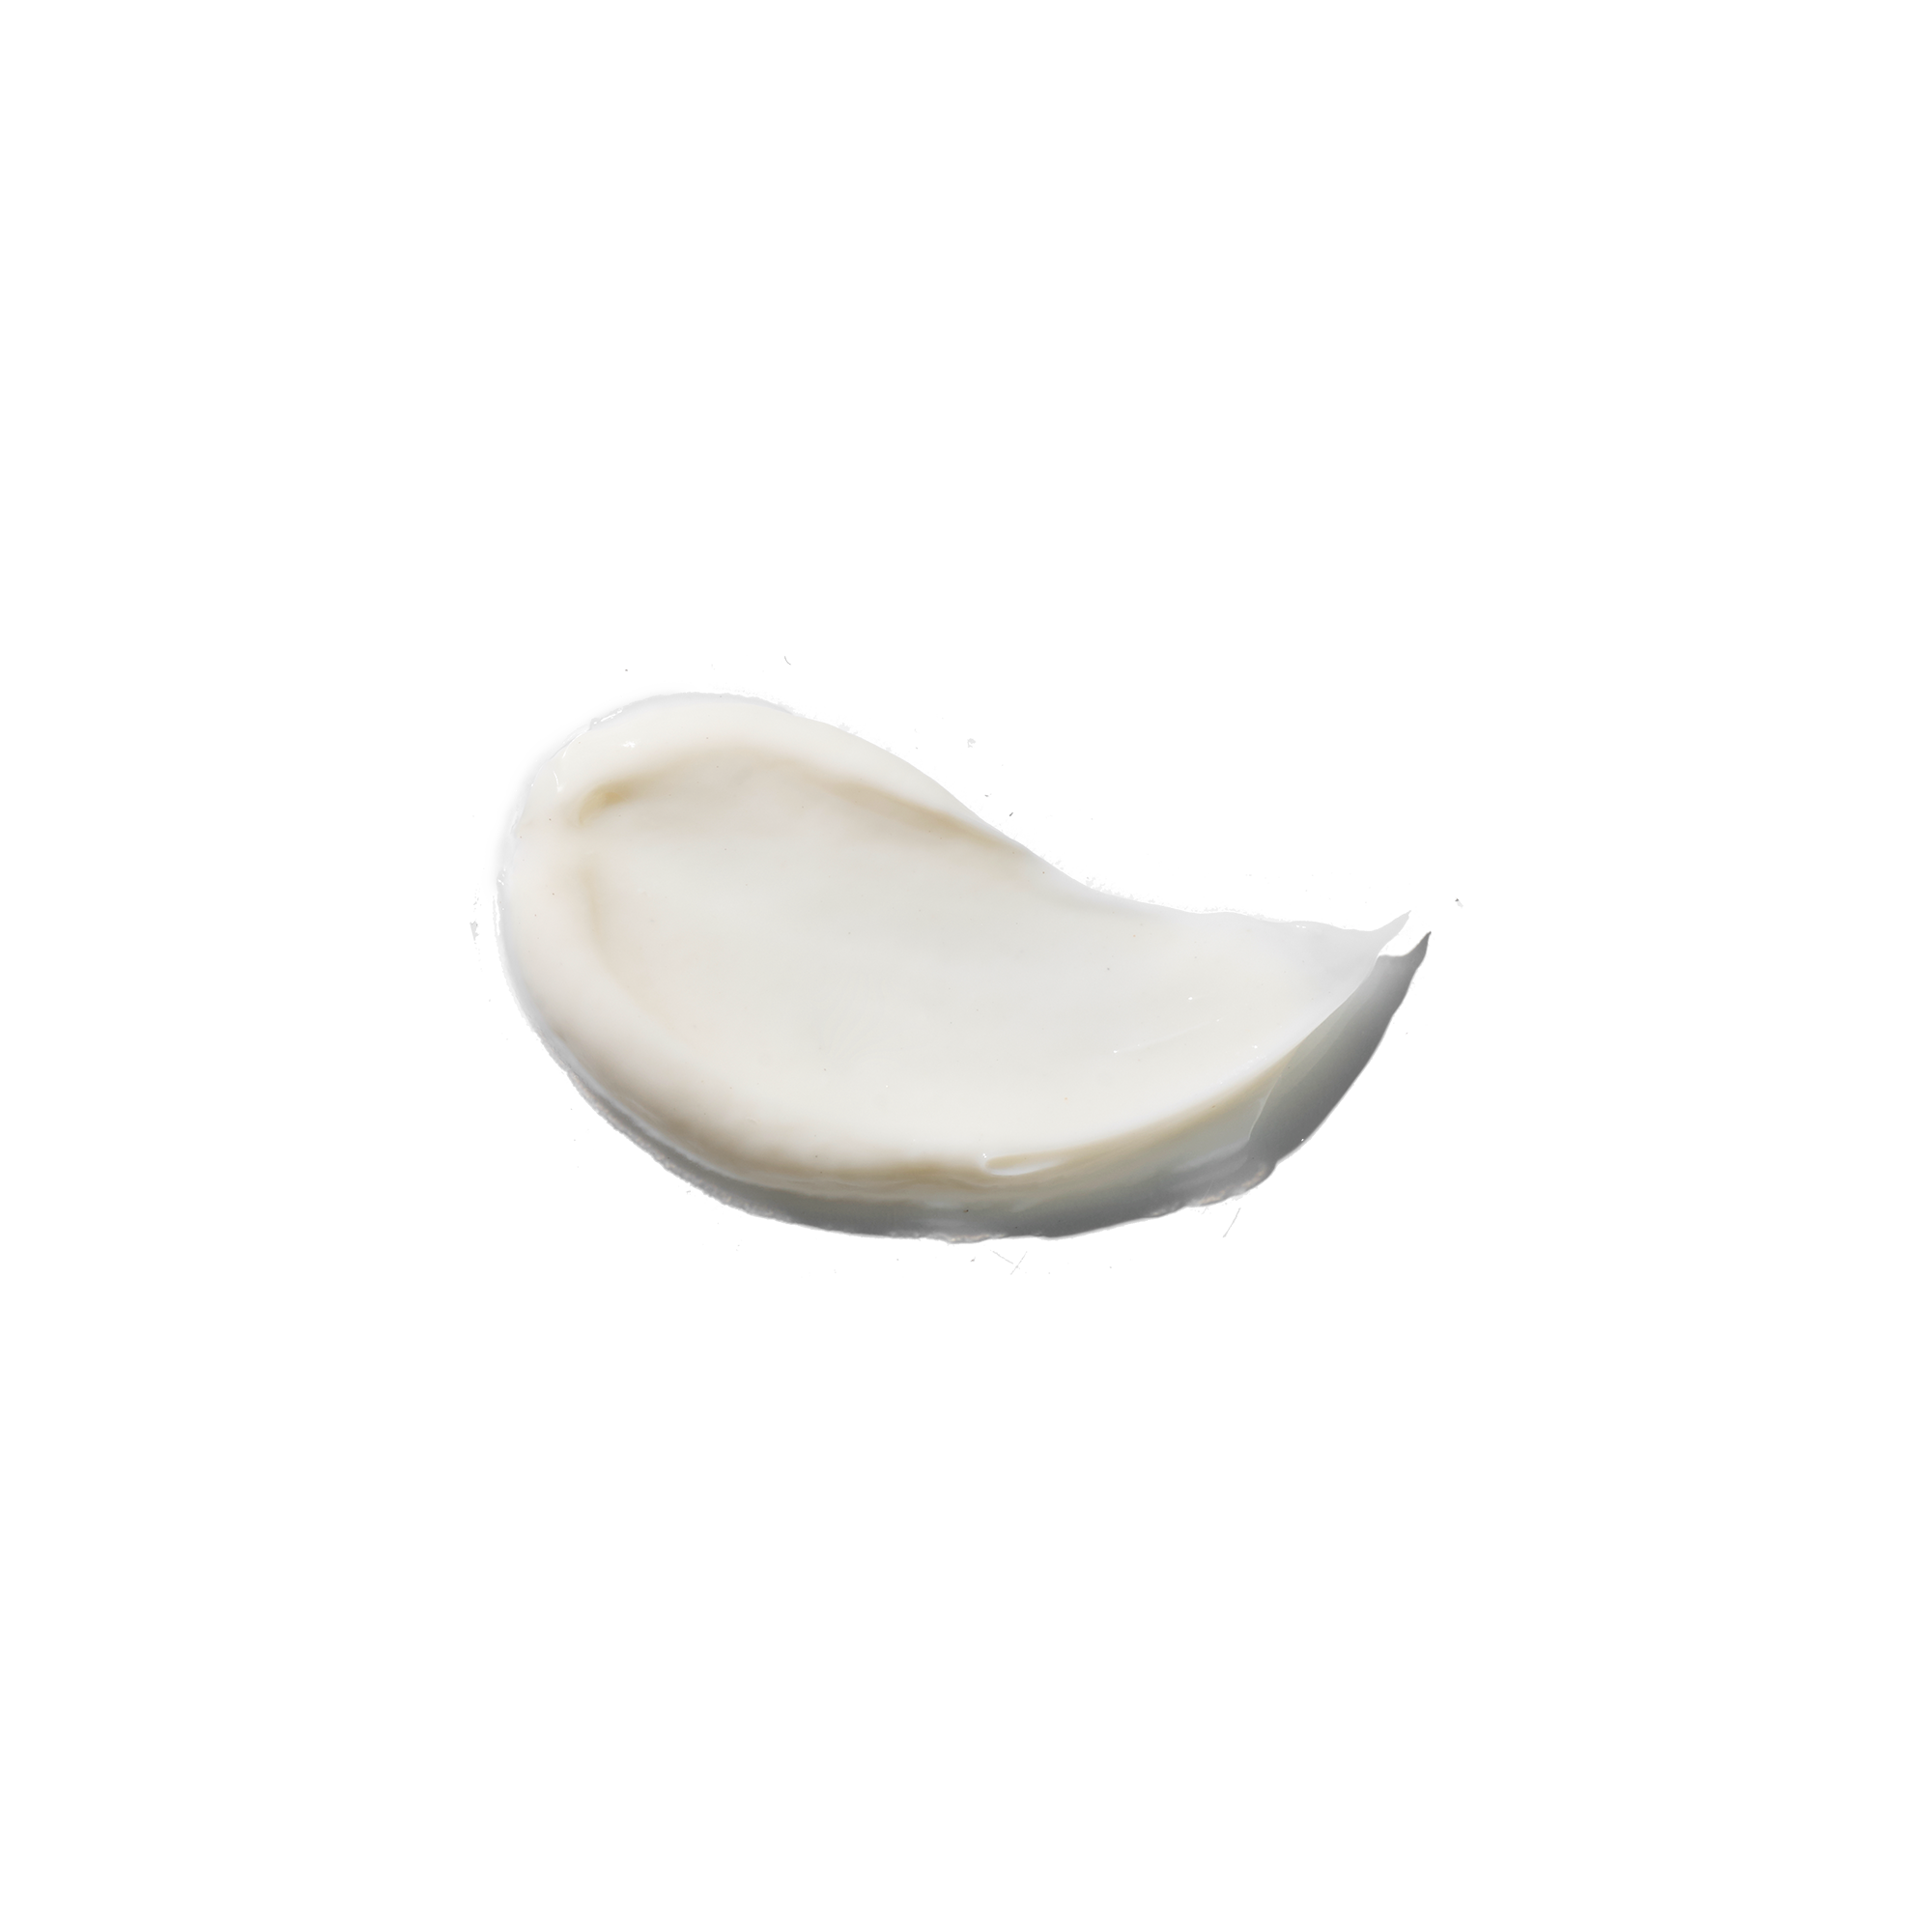 AHAVA® Dermud Intensive Dead Sea Cream Global AHAVA – Mud Hand